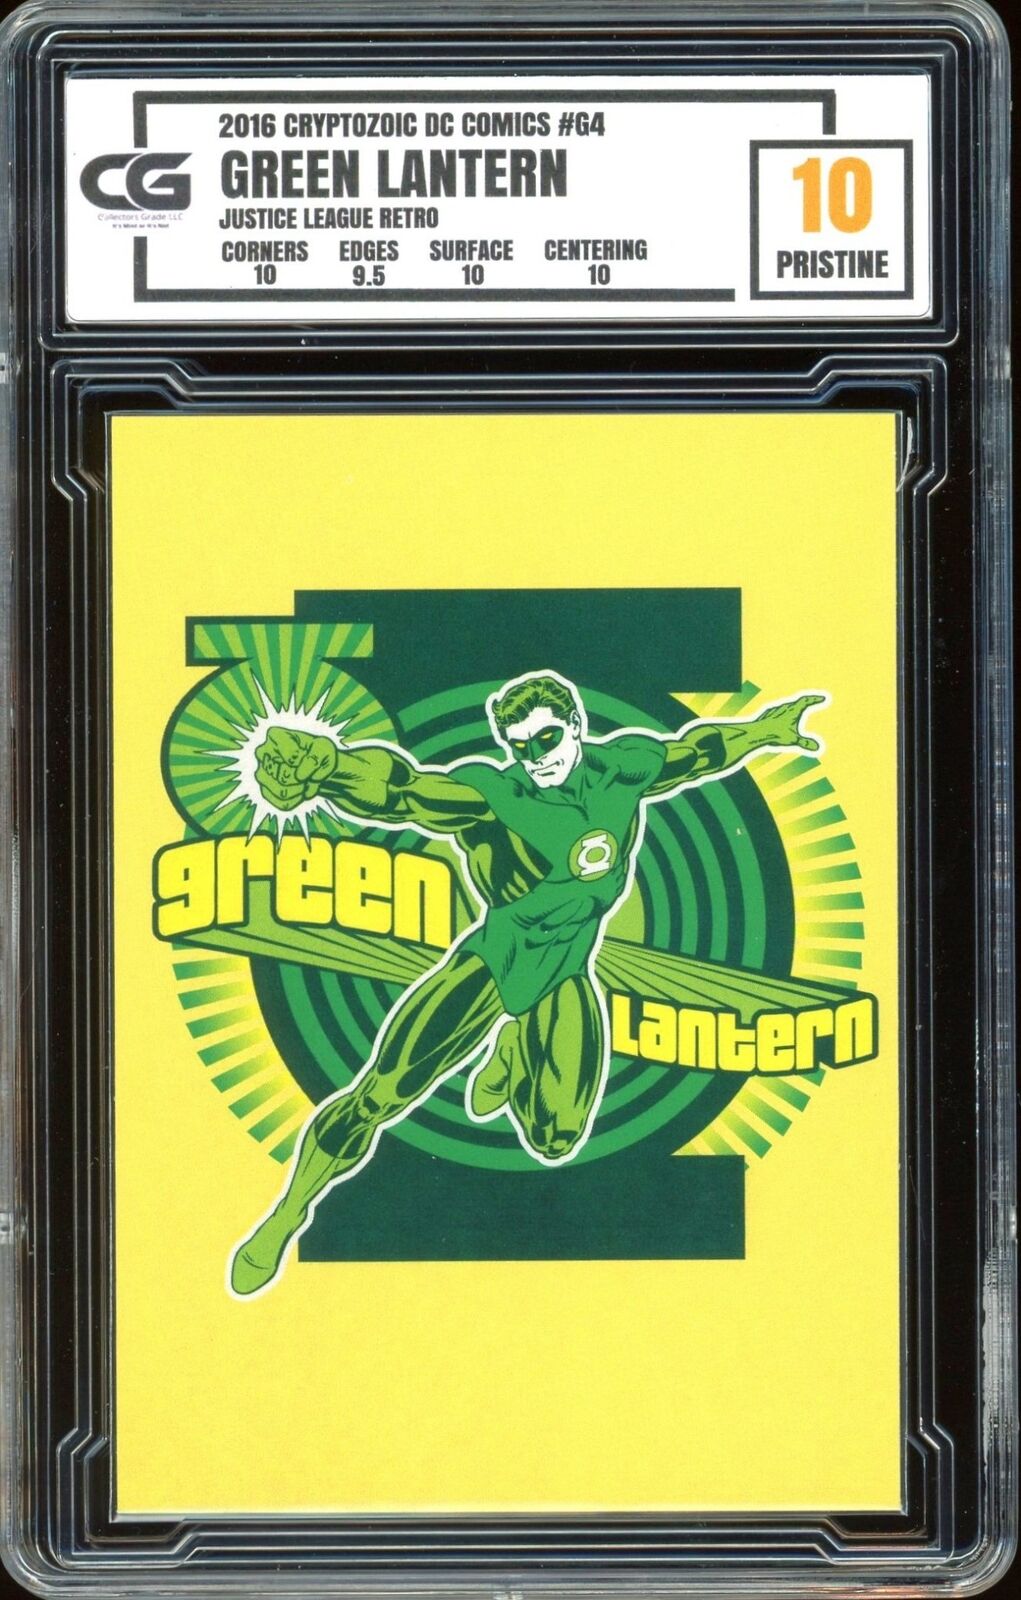 2016 Cryptozoic DC Comics Justice League Retro #G4 Green Lantern CG 10 PRISTINE